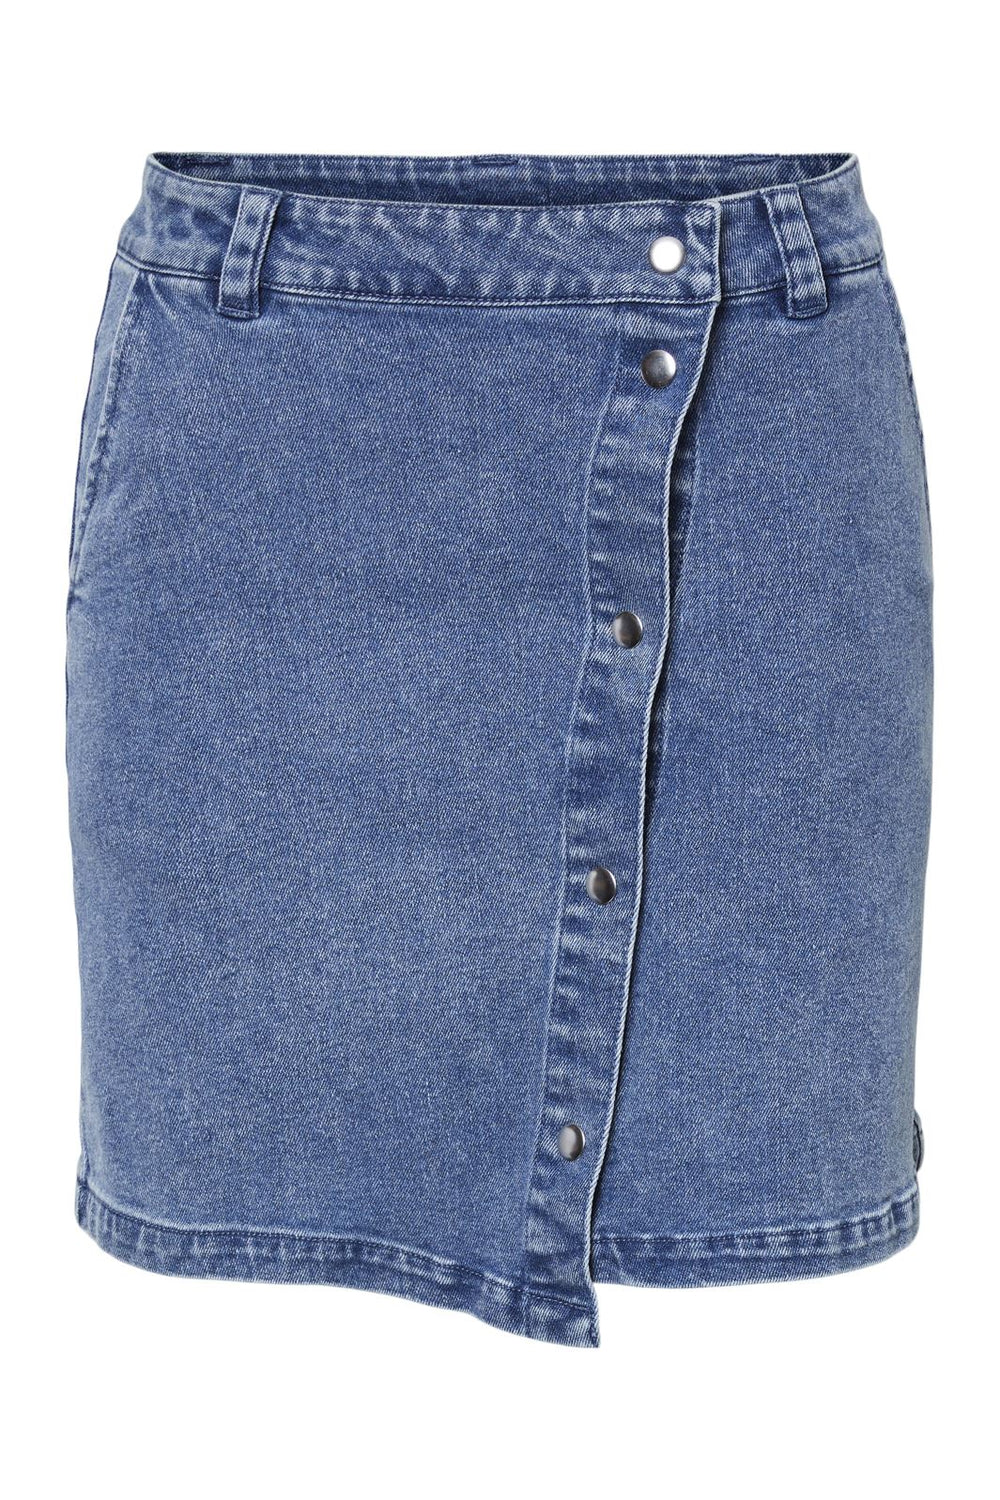 Pieces - Pcmaggie Short Denim Skirt - 4529040 Medium Blue Denim